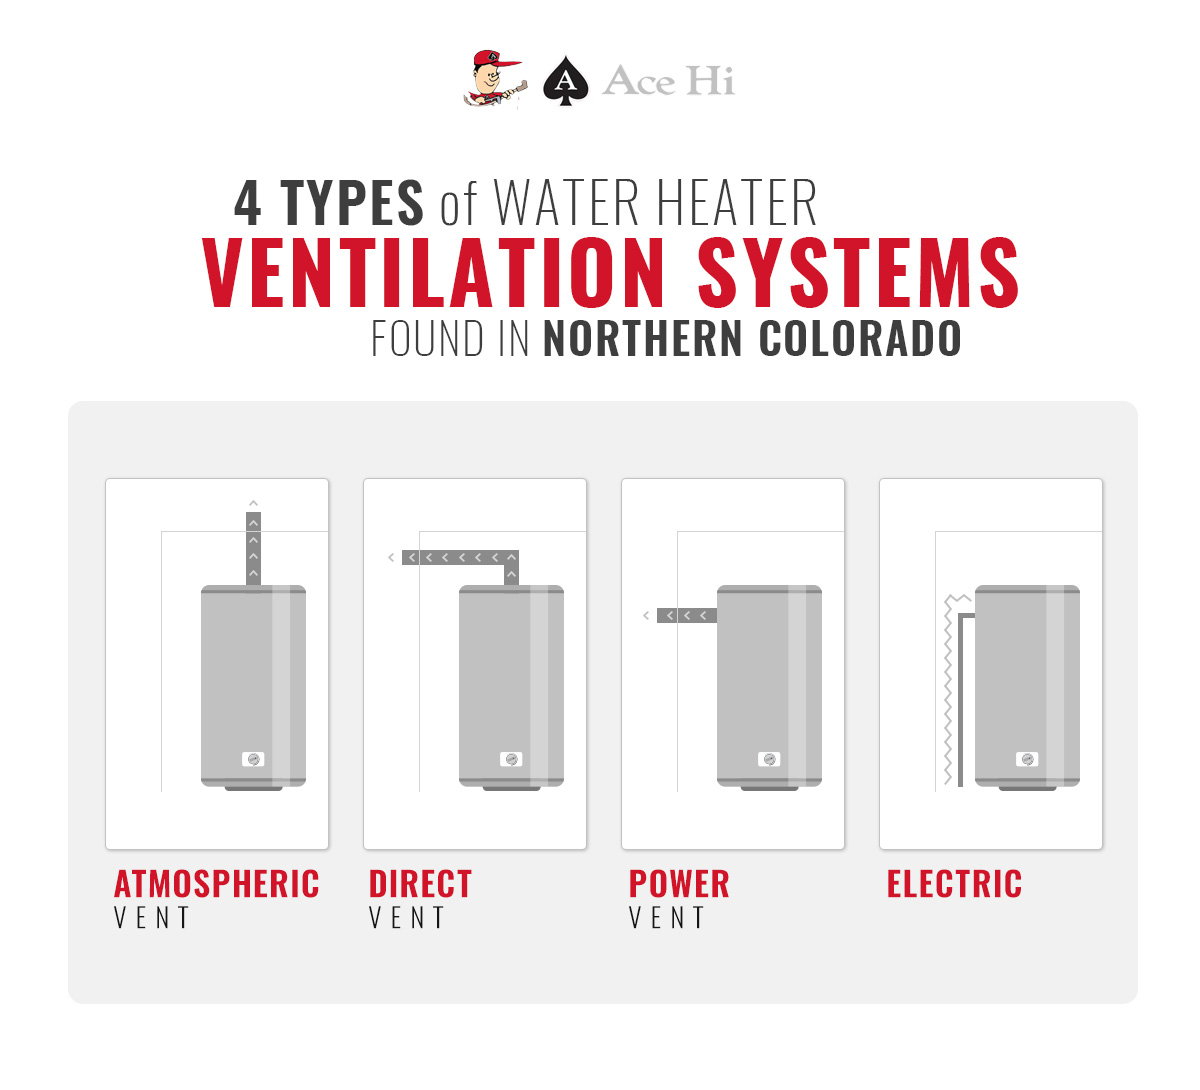 Ventilation-systems-infographic-5e8cbab21cc21